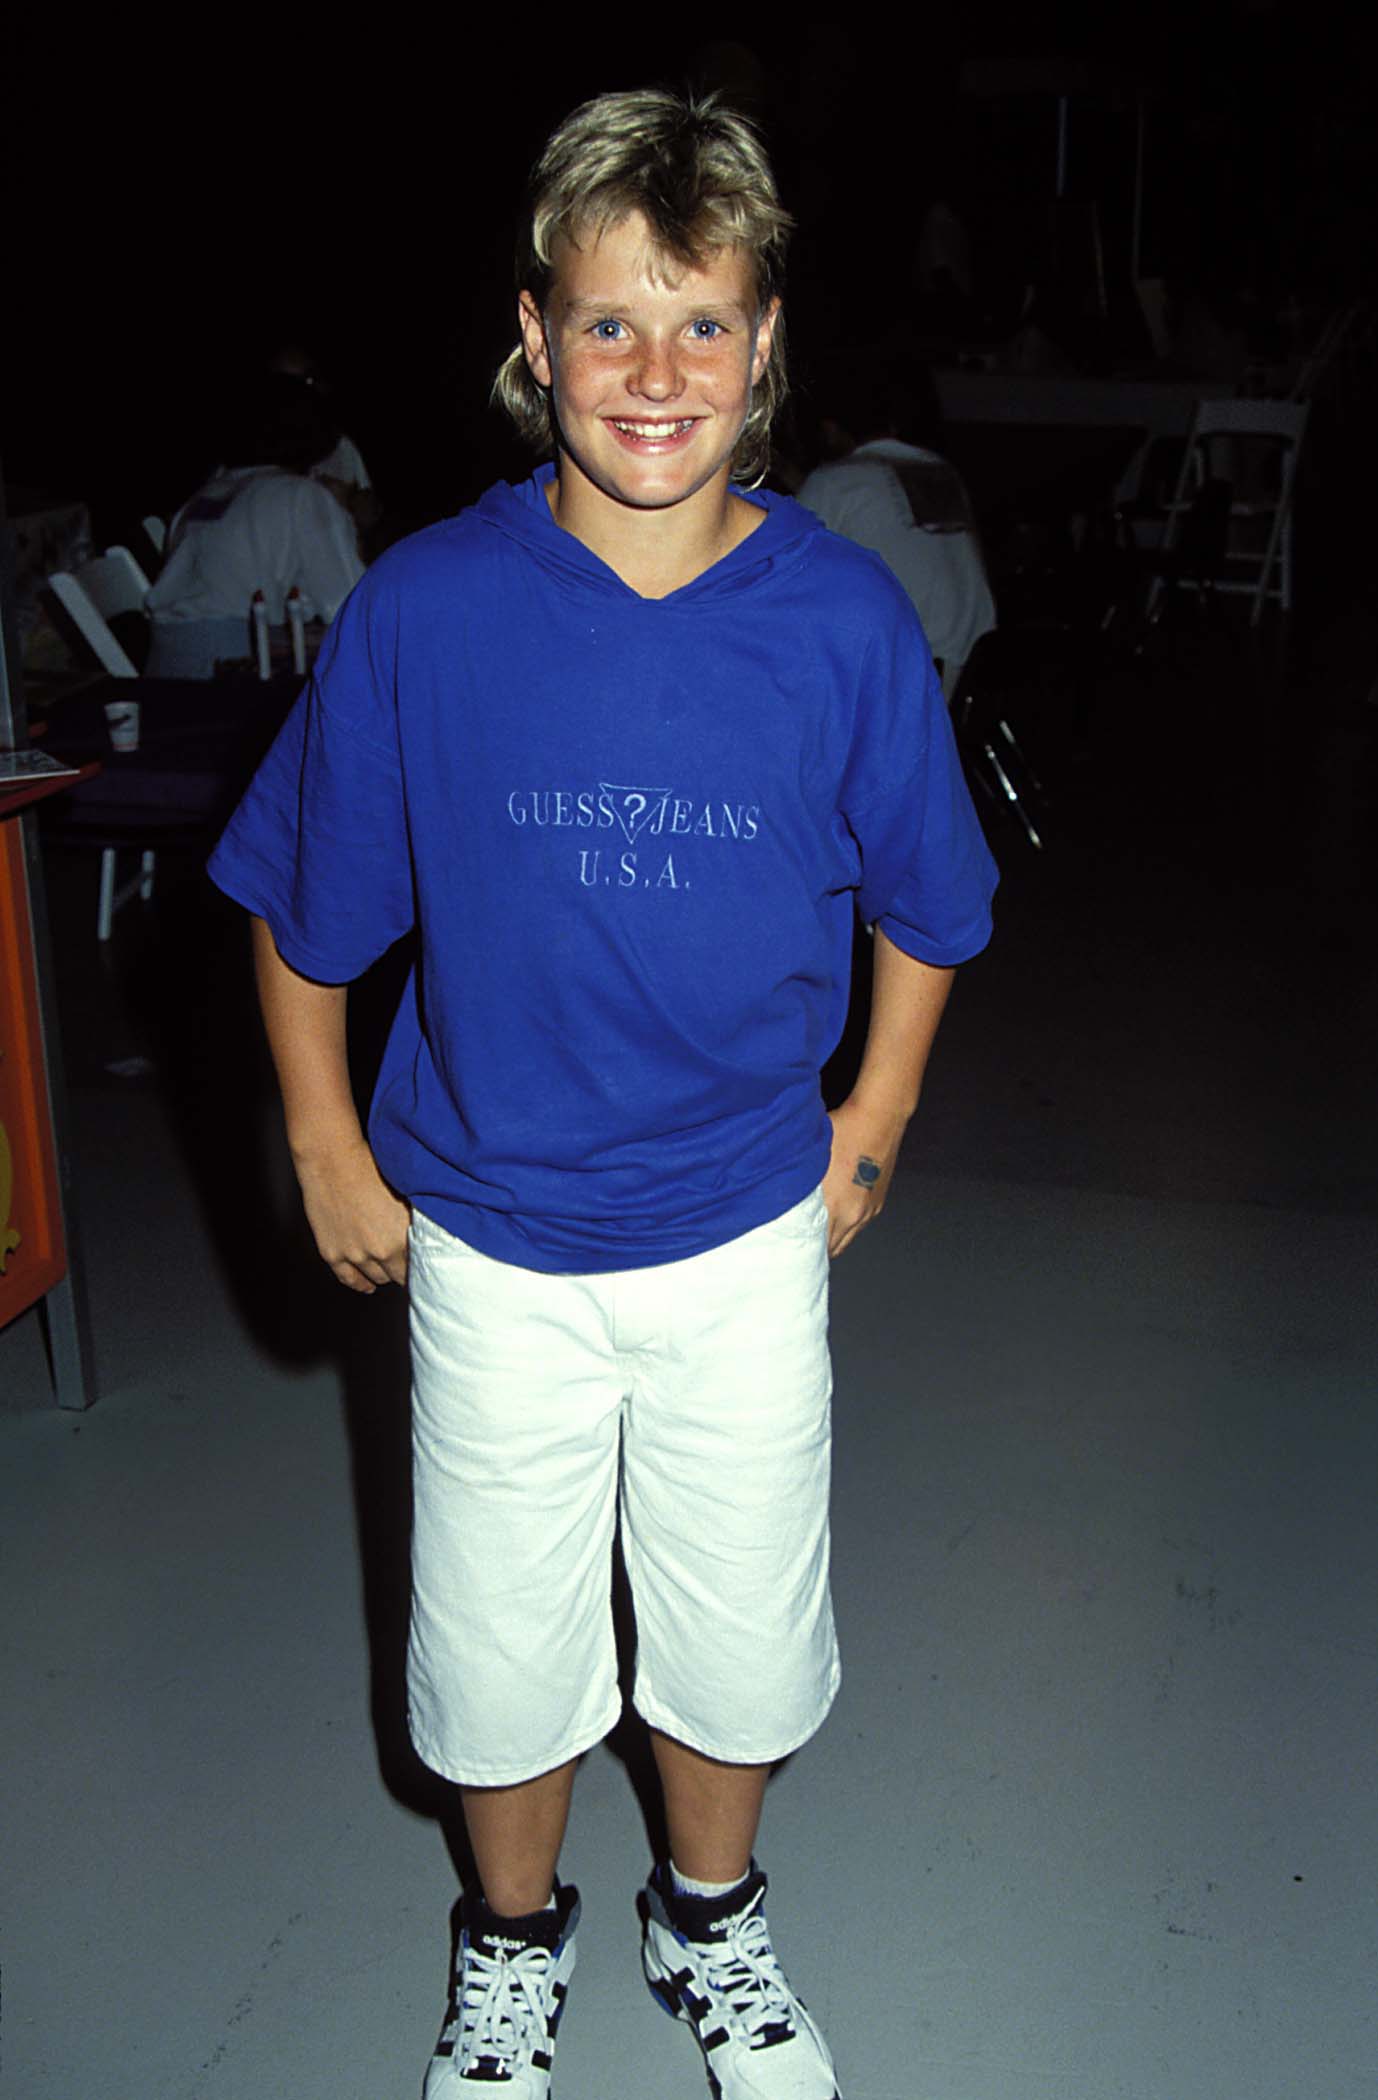 Zachery Ty Bryan on September 7, 1990. | Source: Getty Images